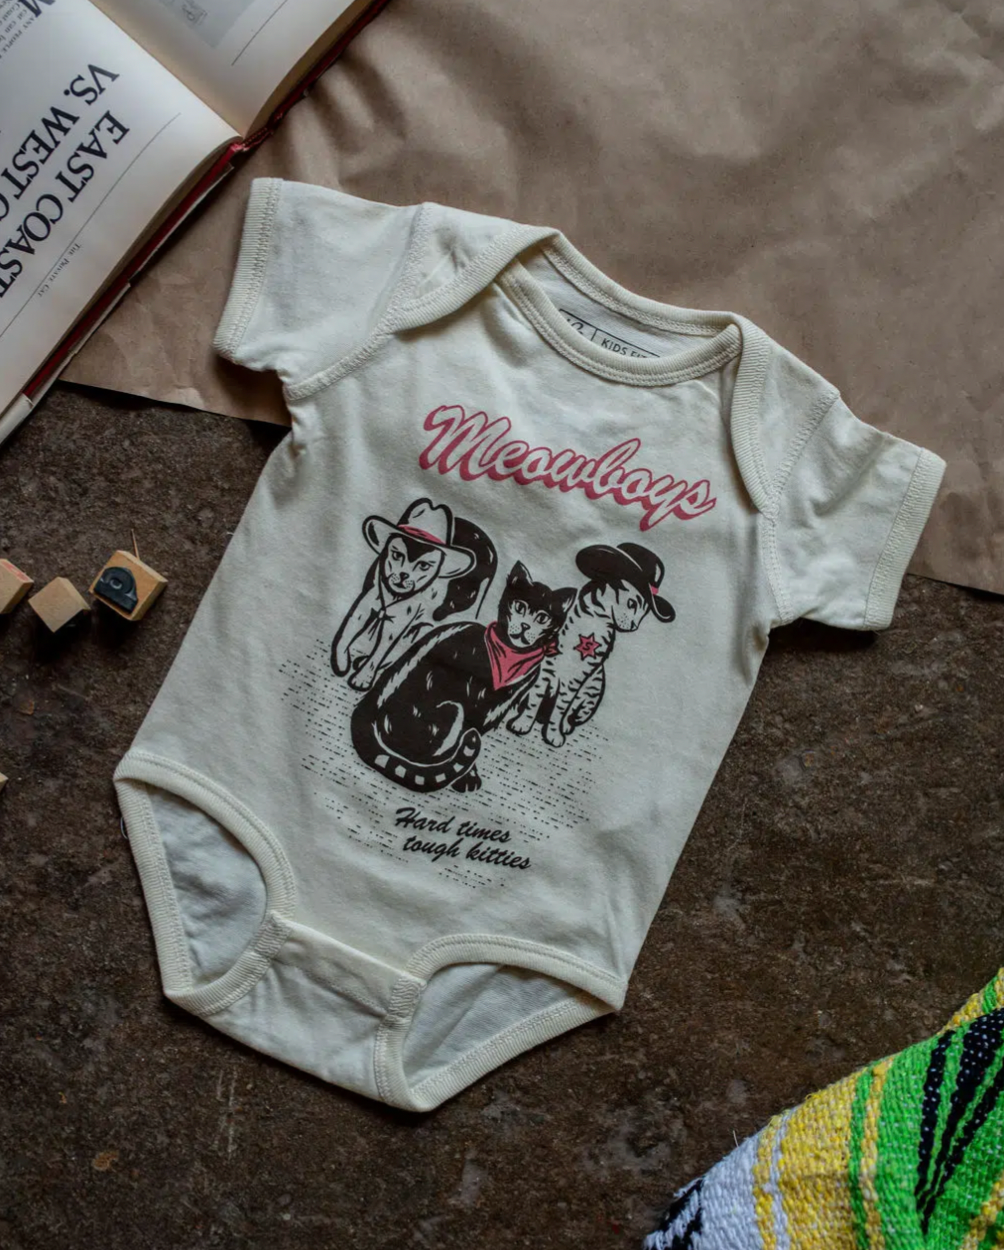 Shop Good | Meowboys baby onesie